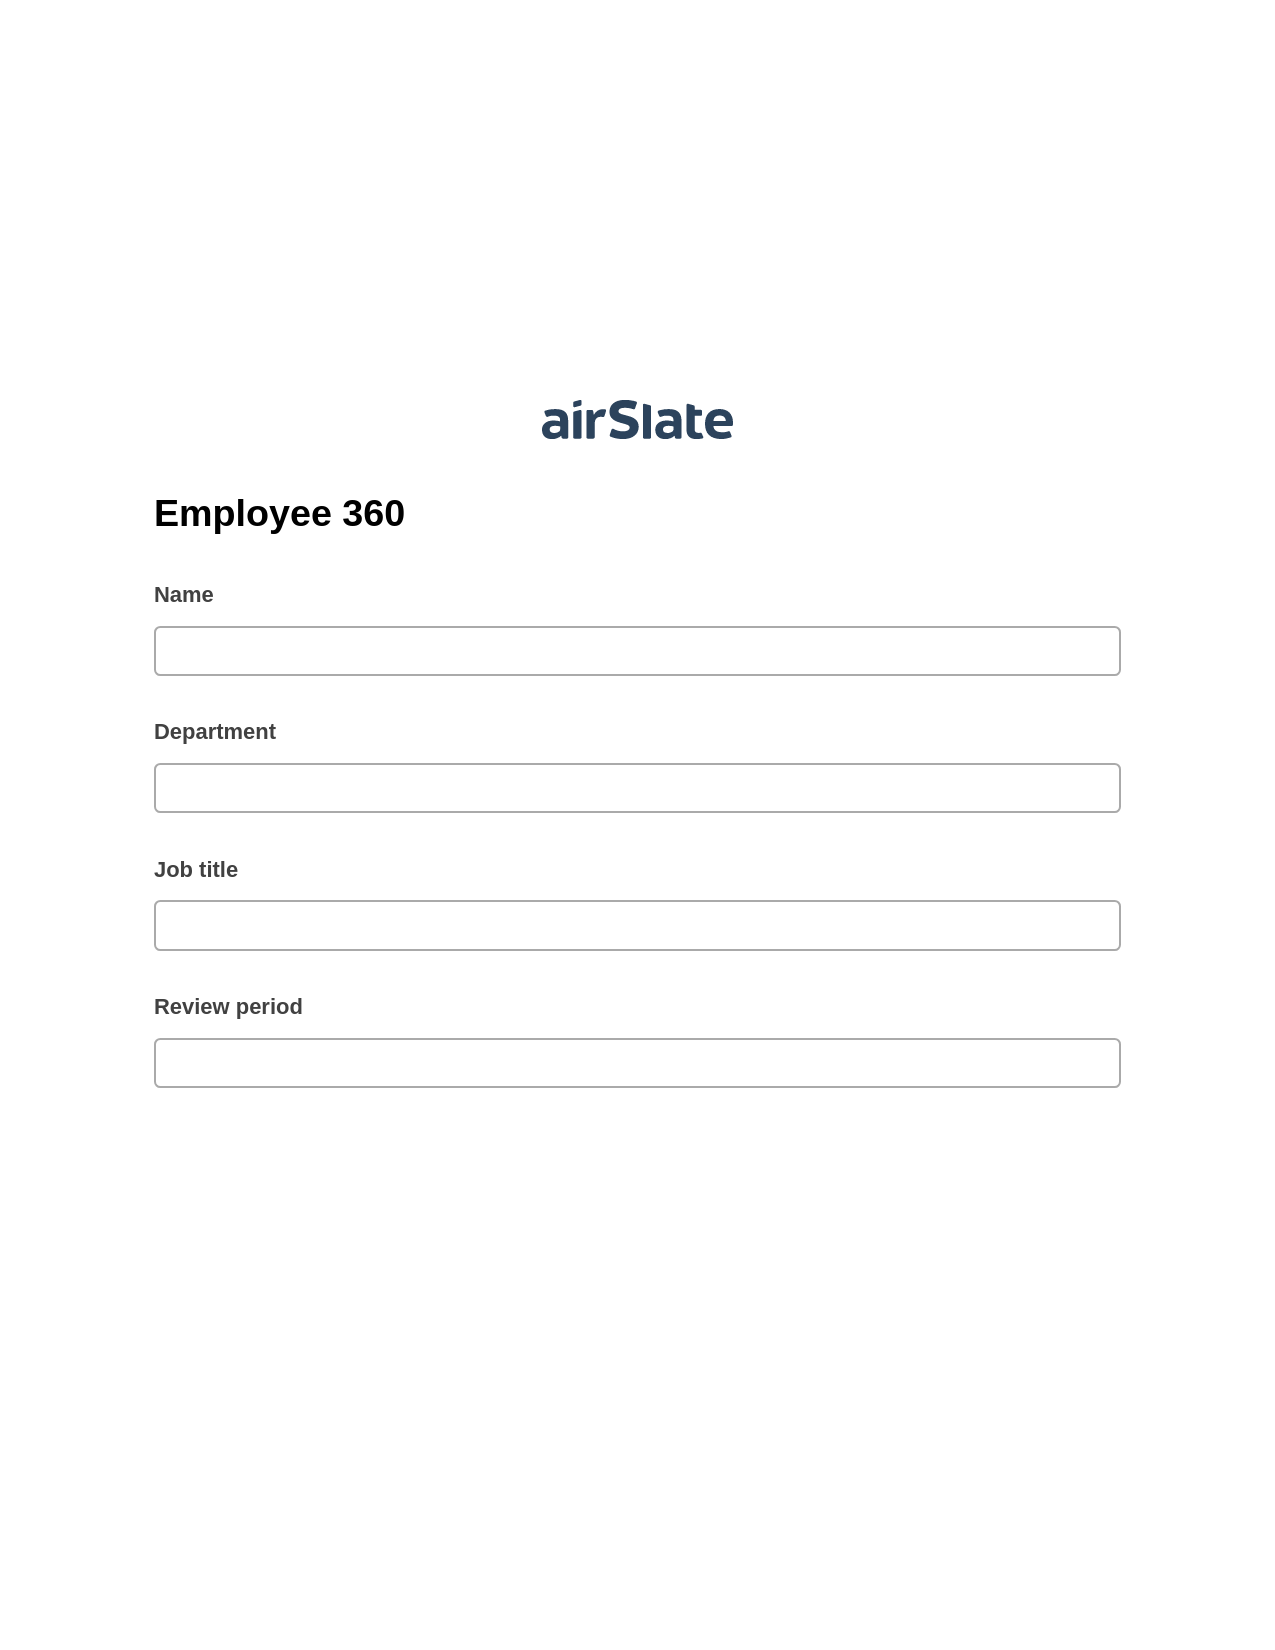 Multirole Employee 360 Prefill from NetSuite records, Invoke Salesforce Process Bot, Archive to SharePoint Folder Bot